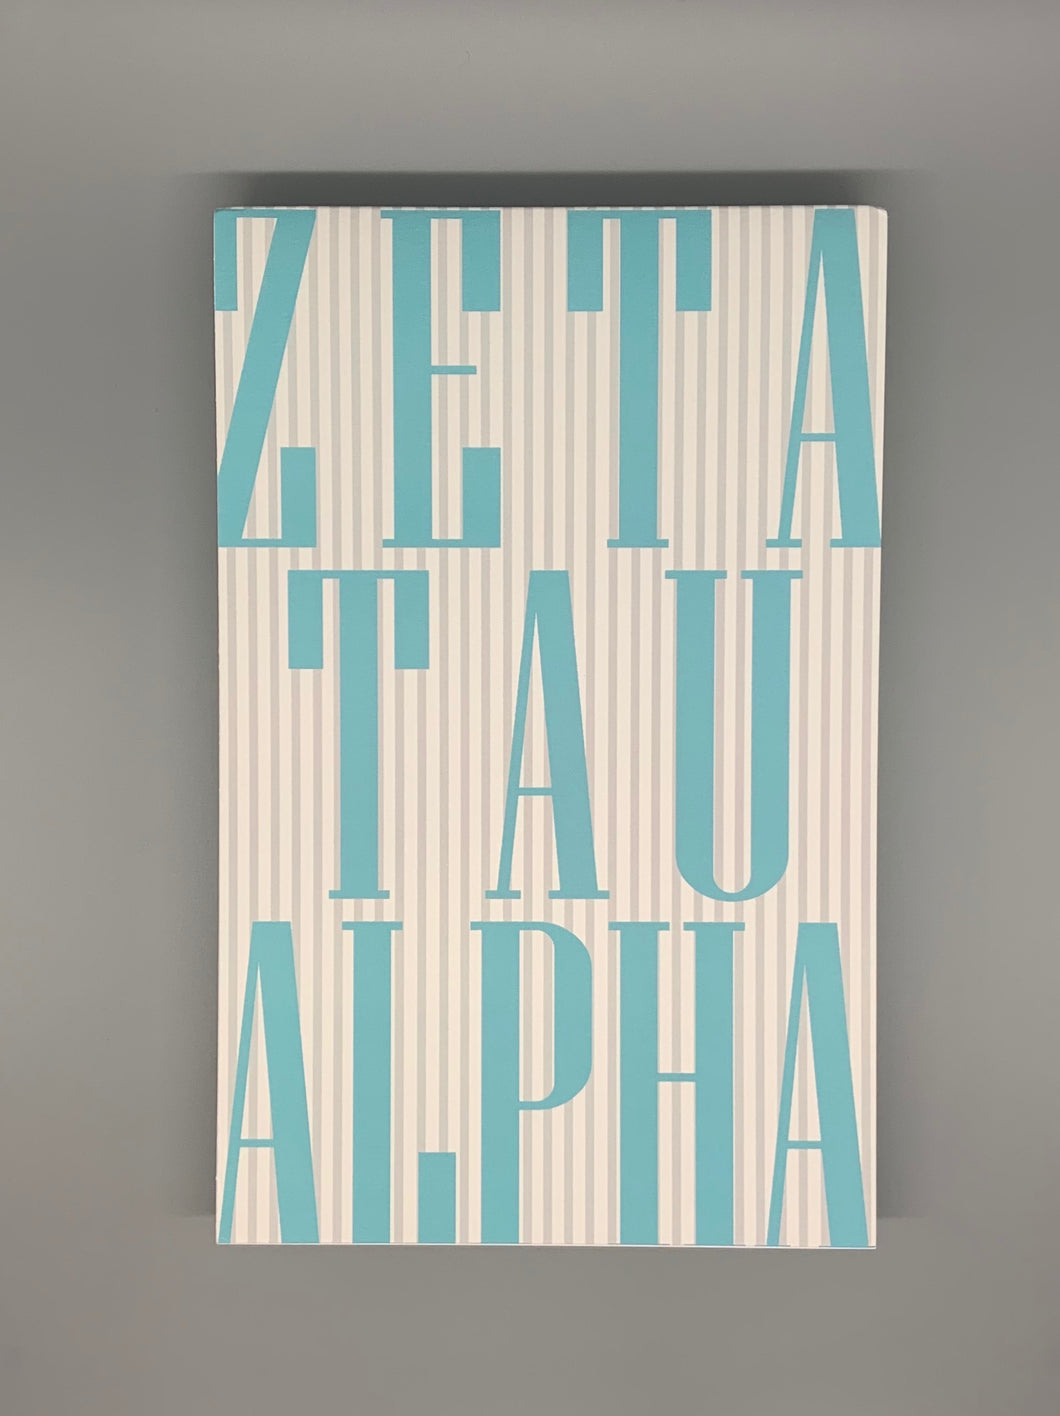 Zeta Tau Alpha Notepad